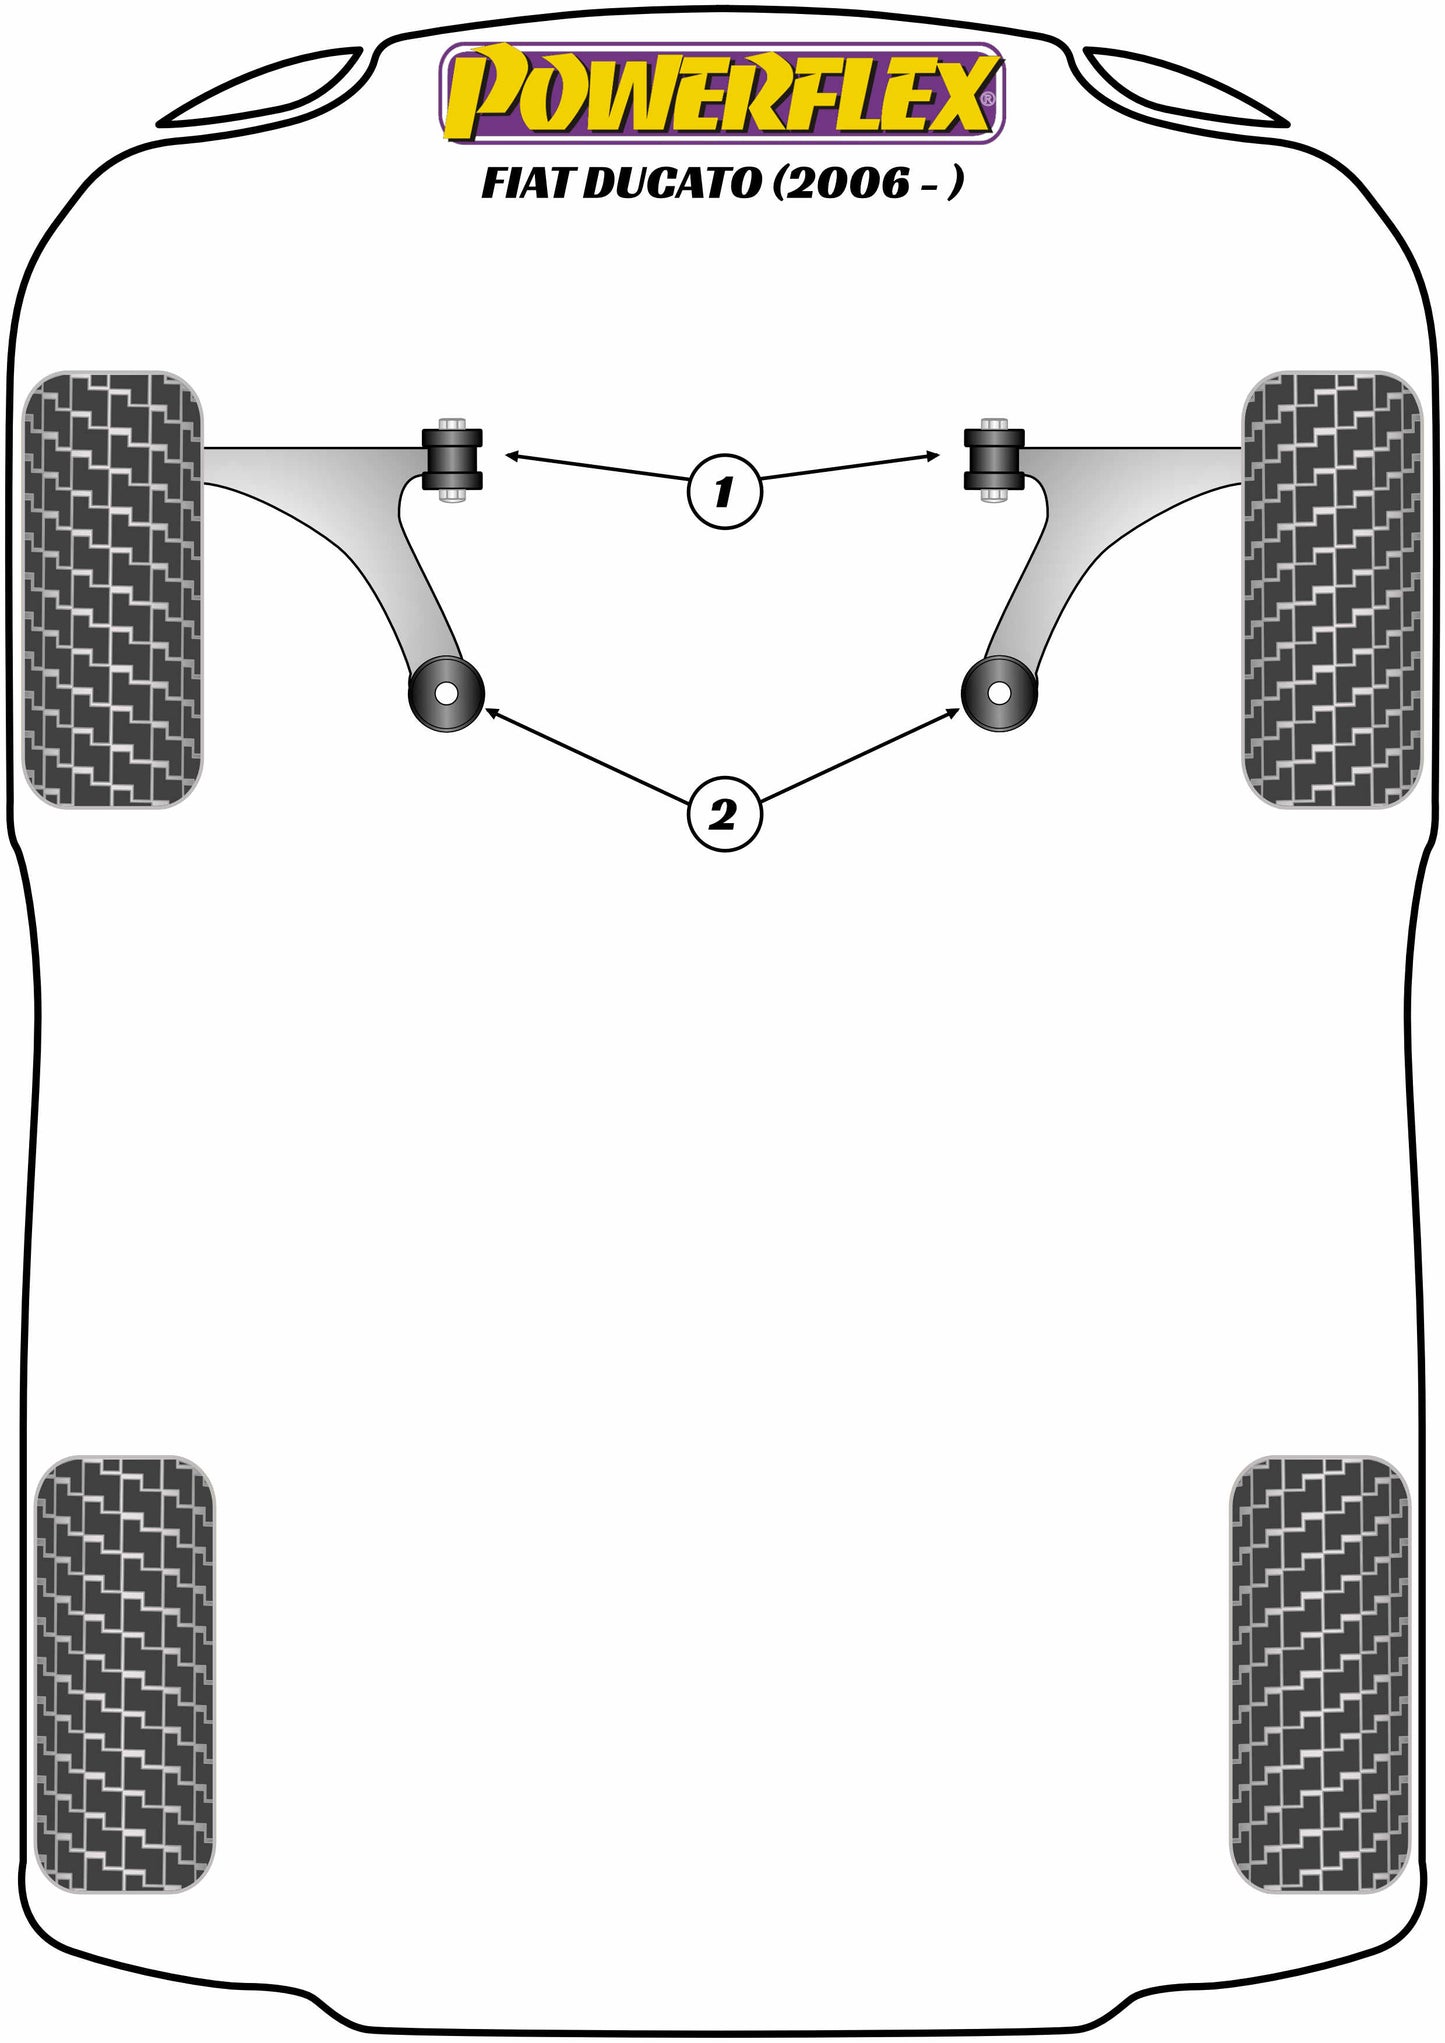 Powerflex Exhaust Mount (Cat Section) for Fiat Ducato (06-)